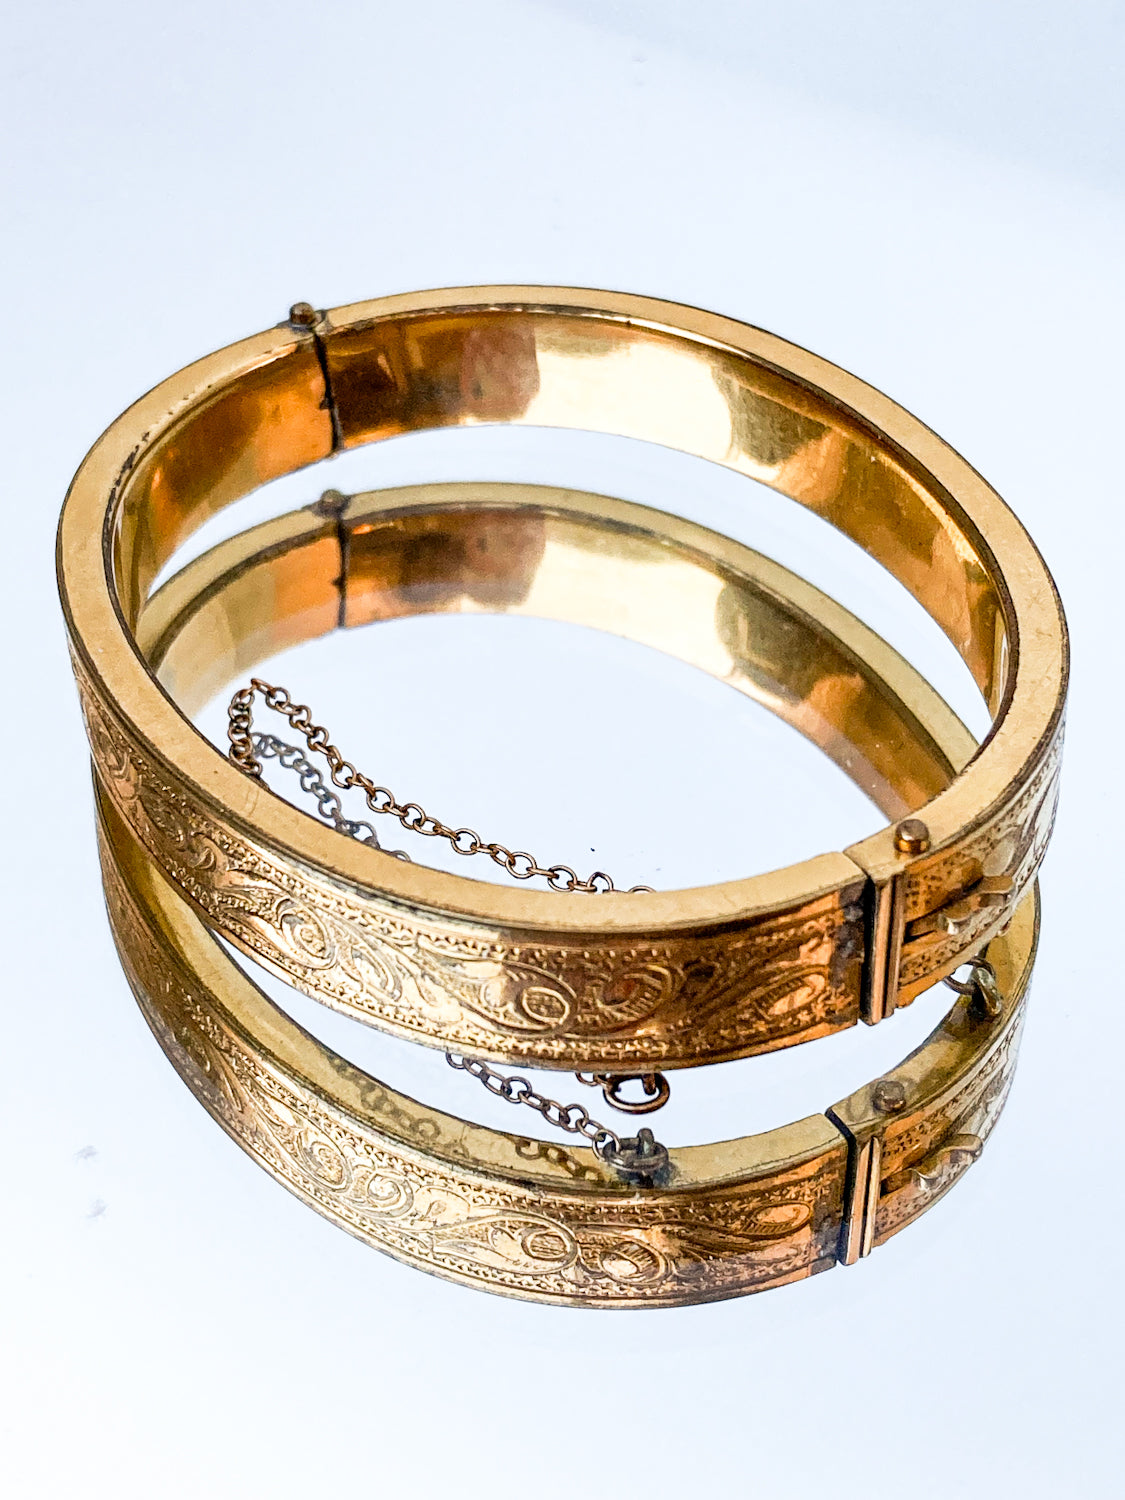 Antique Victorian Gold Filled Engraved Hinged Bangle Bracelet on mirror